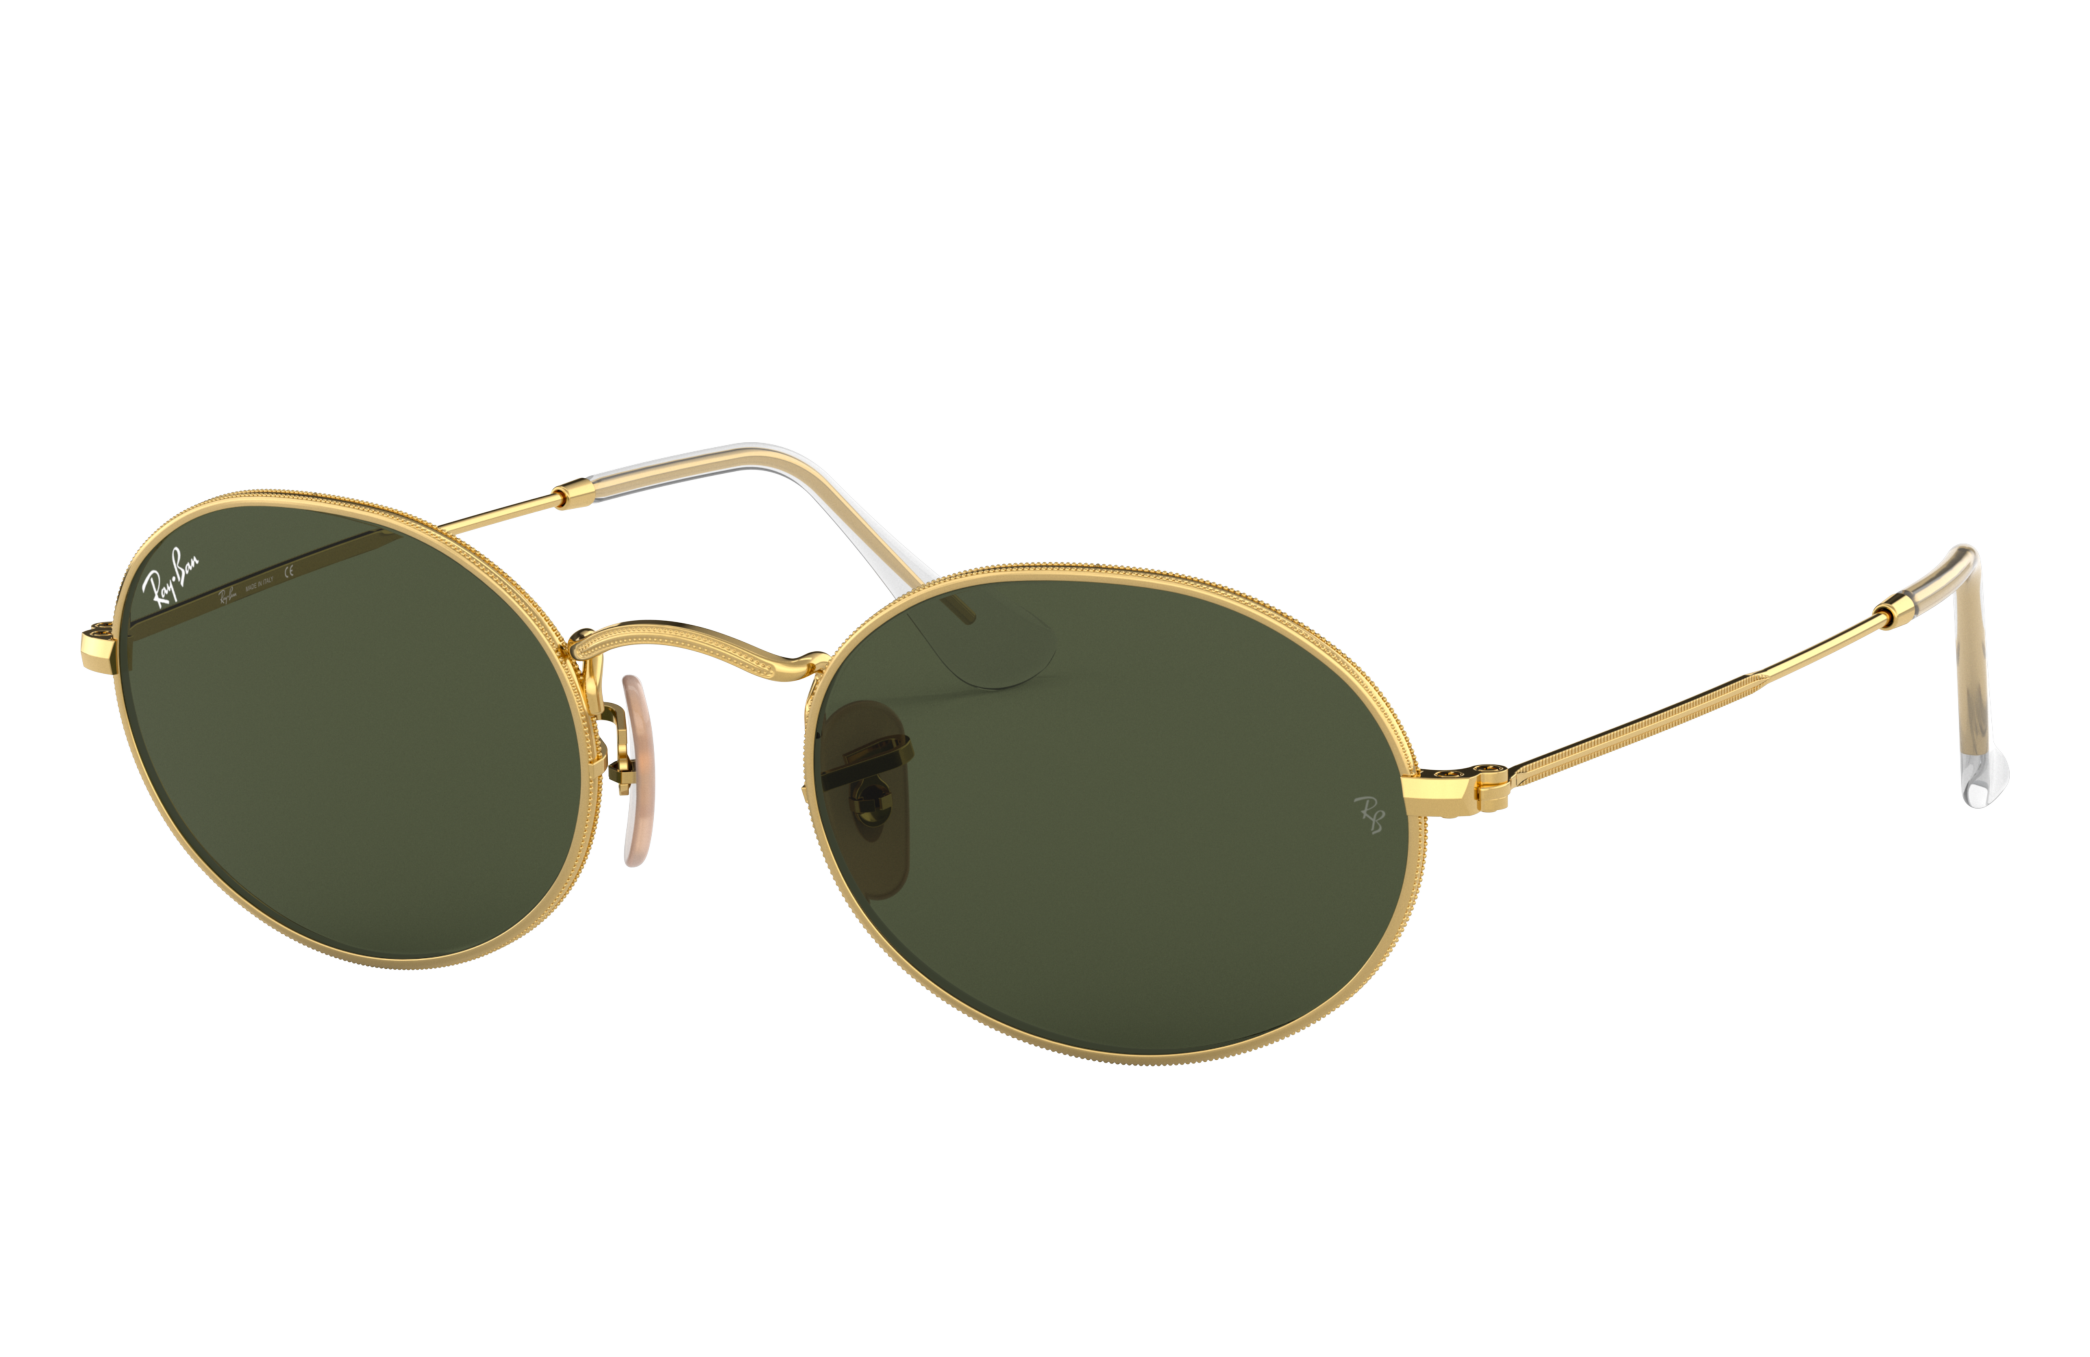 Accessories Sunglasses Oval Sunglasses Rayban Oval Sunglasses black-gold-colored casual look 